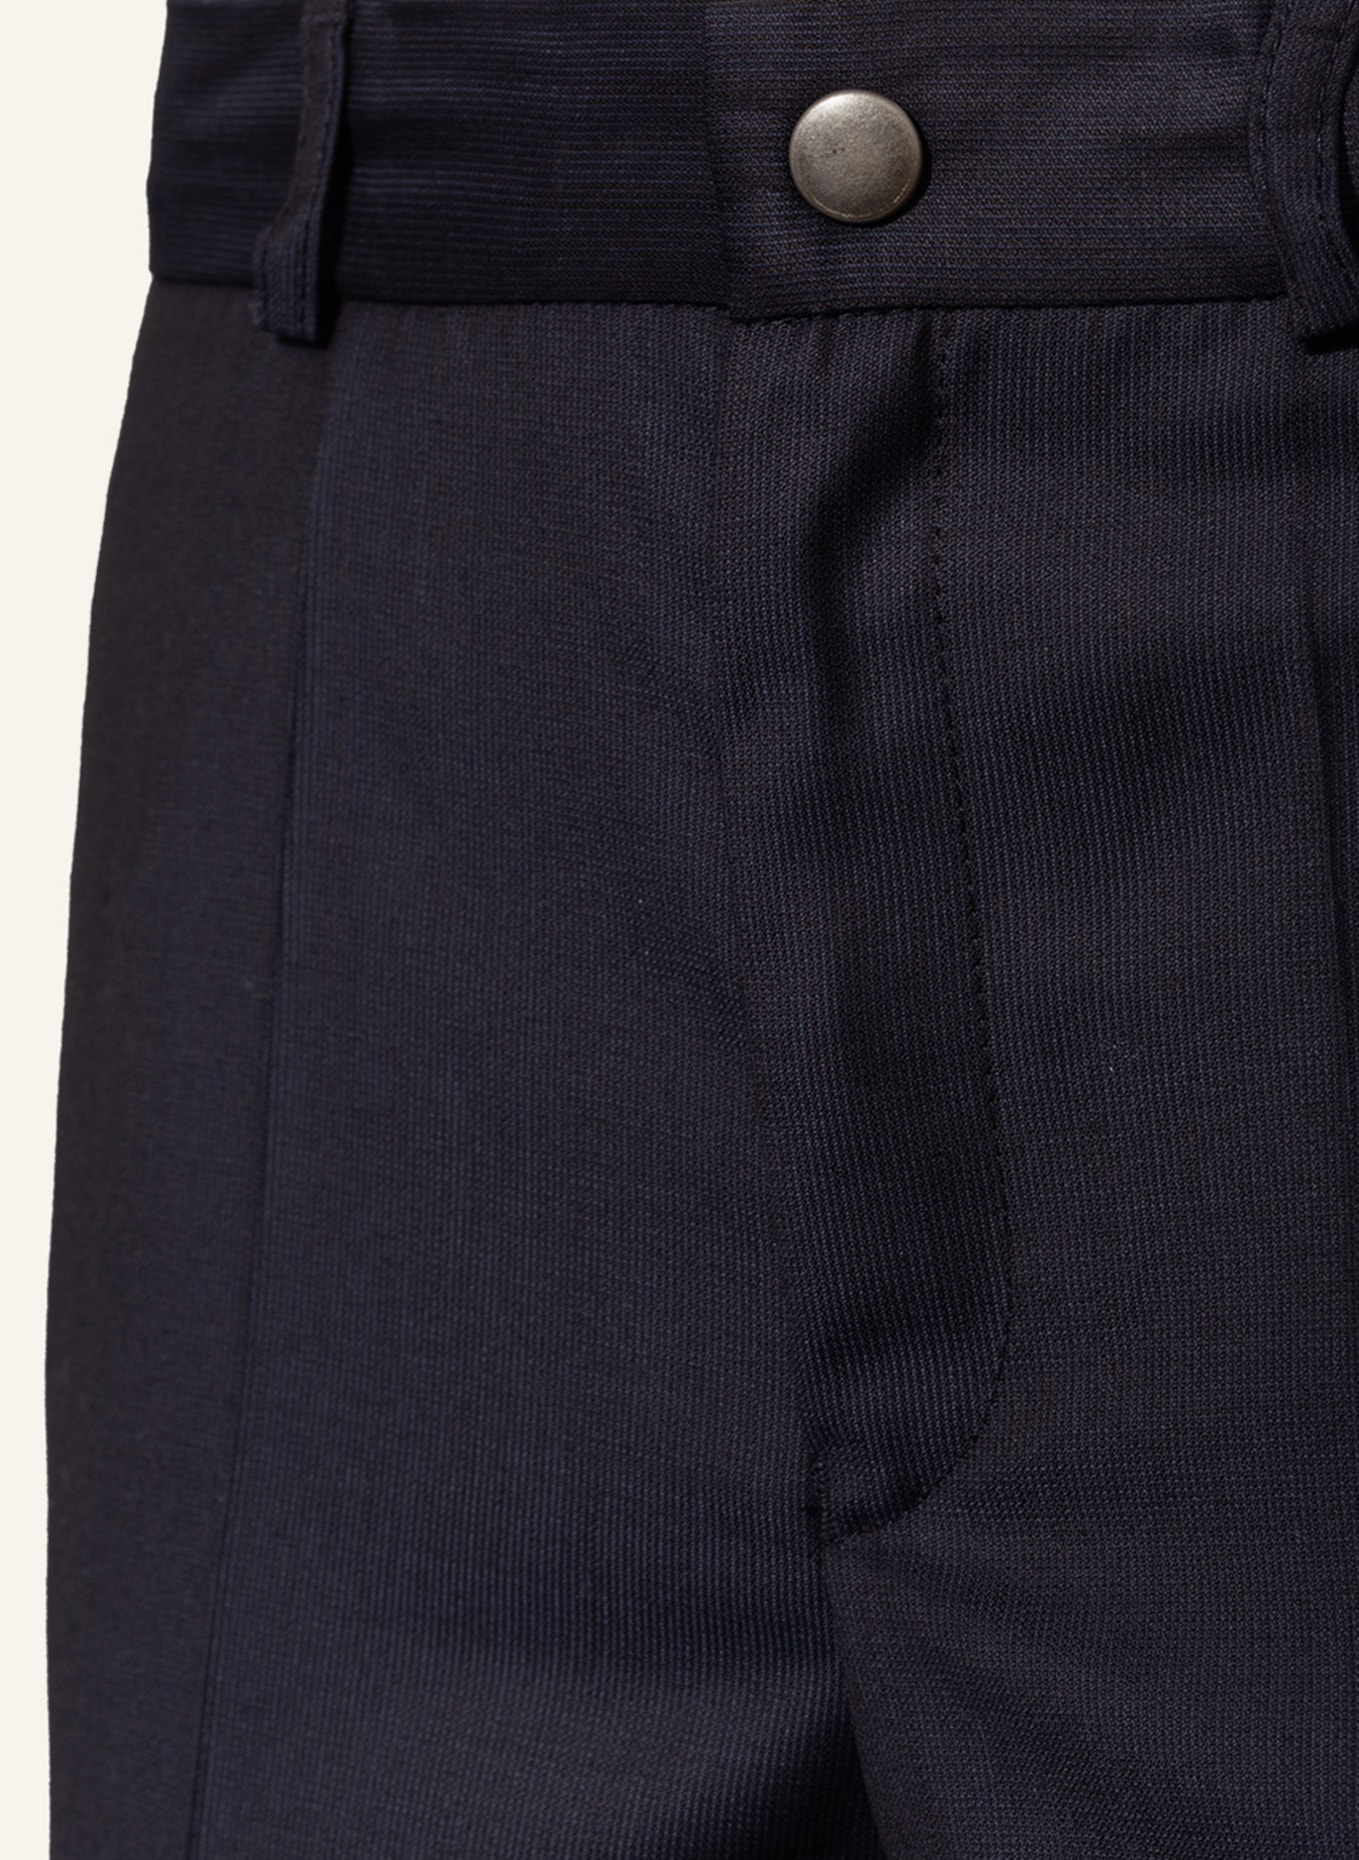 G.O.L. FINEST COLLECTION Anzughose Regular Fit, Farbe: DUNKELBLAU (Bild 3)